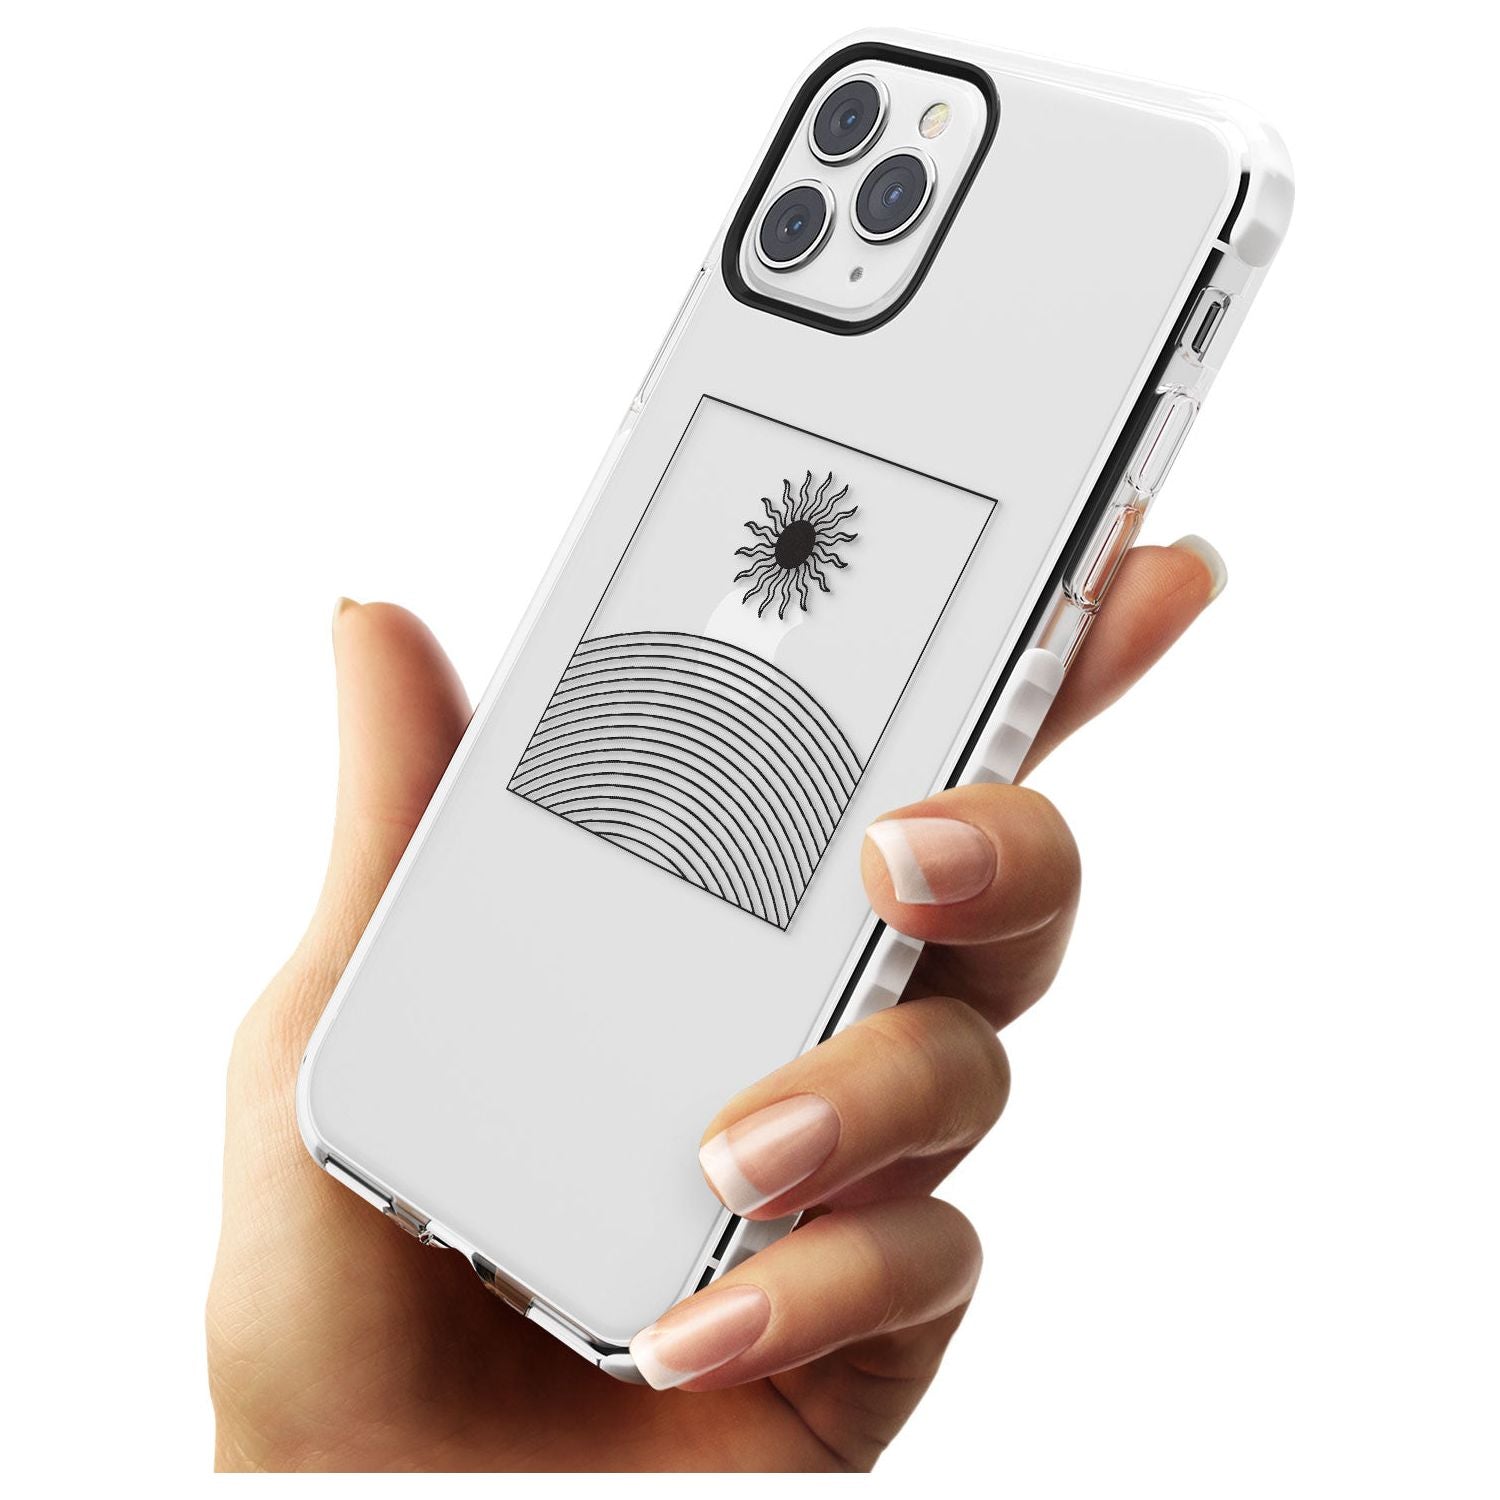 Framed Linework: Rising Sun Slim TPU Phone Case for iPhone 11 Pro Max